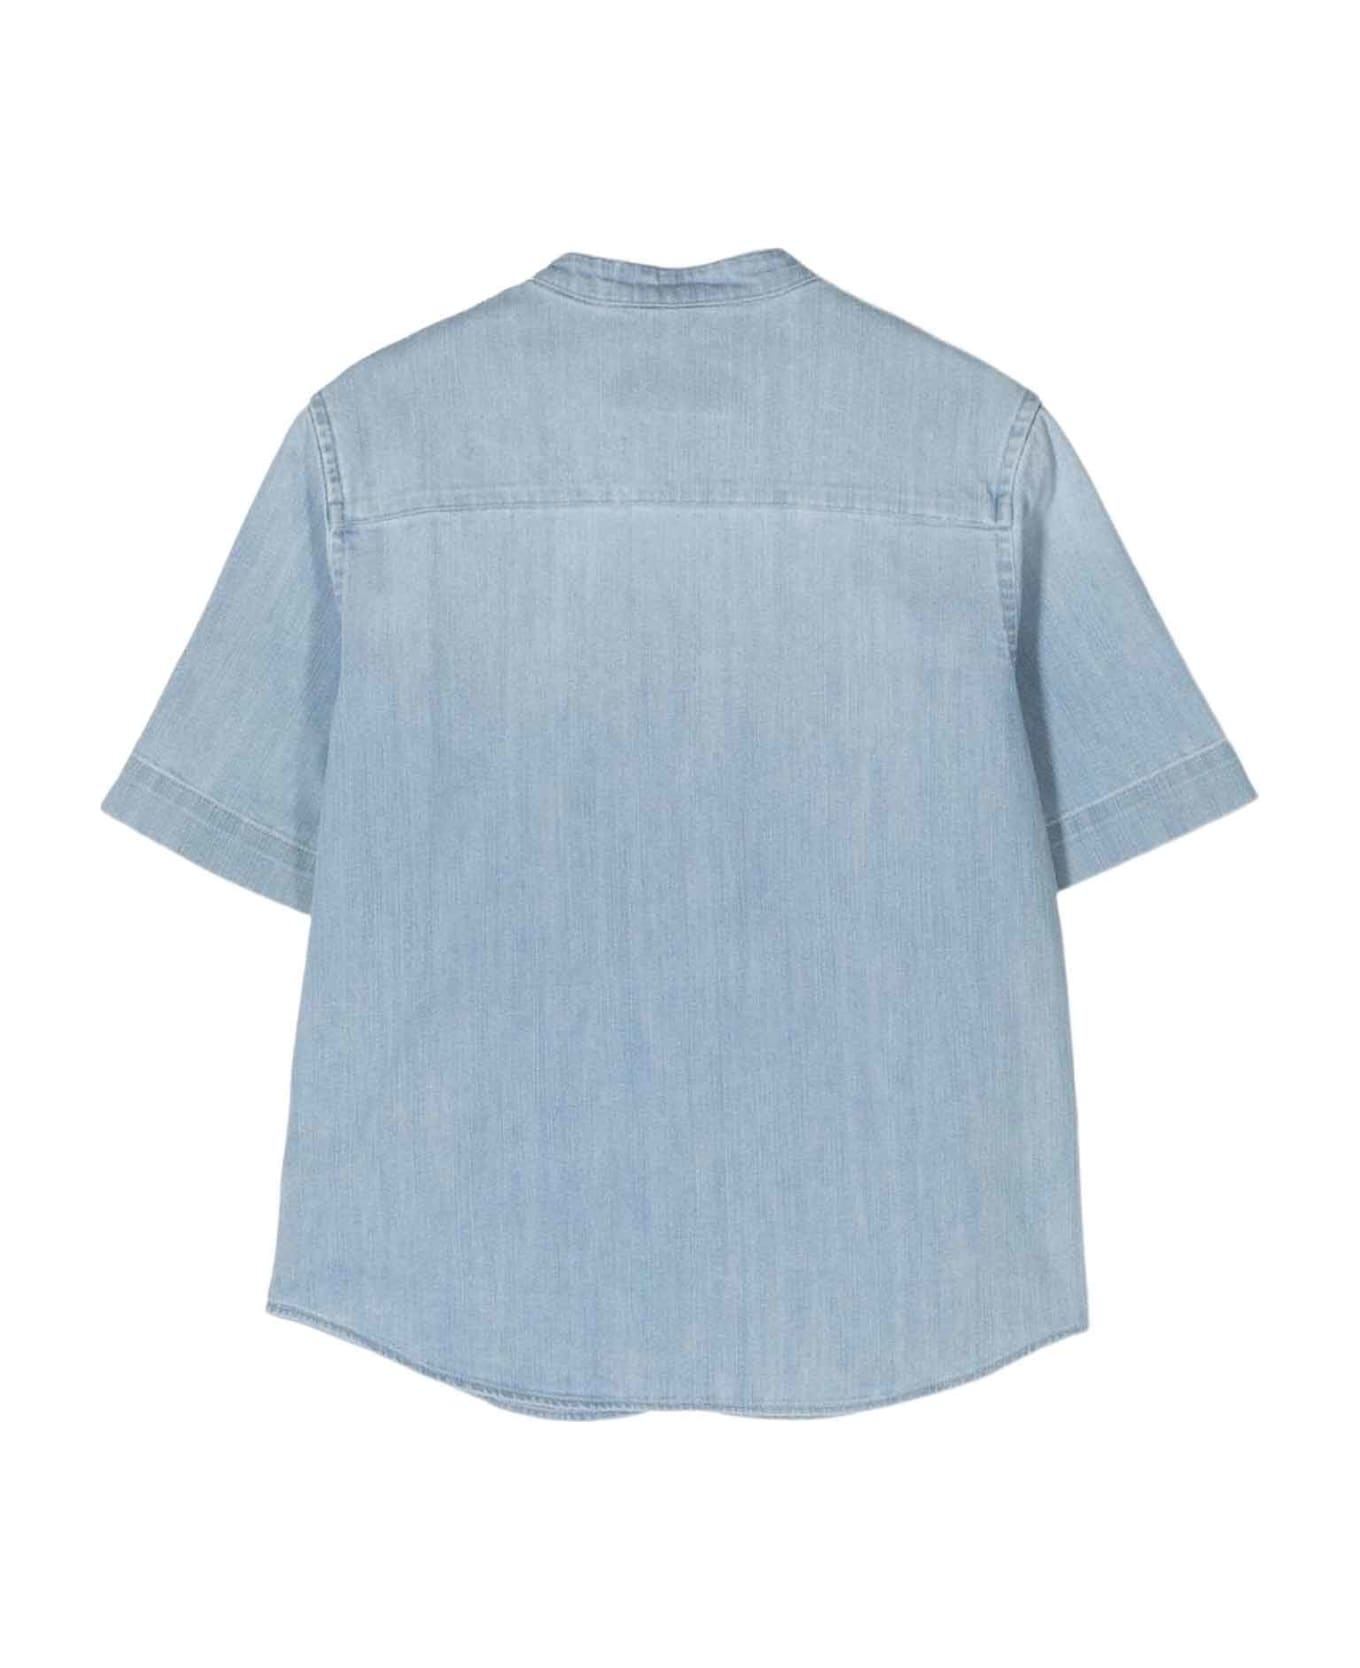 Dondup Denim Shirt Boy - Blu